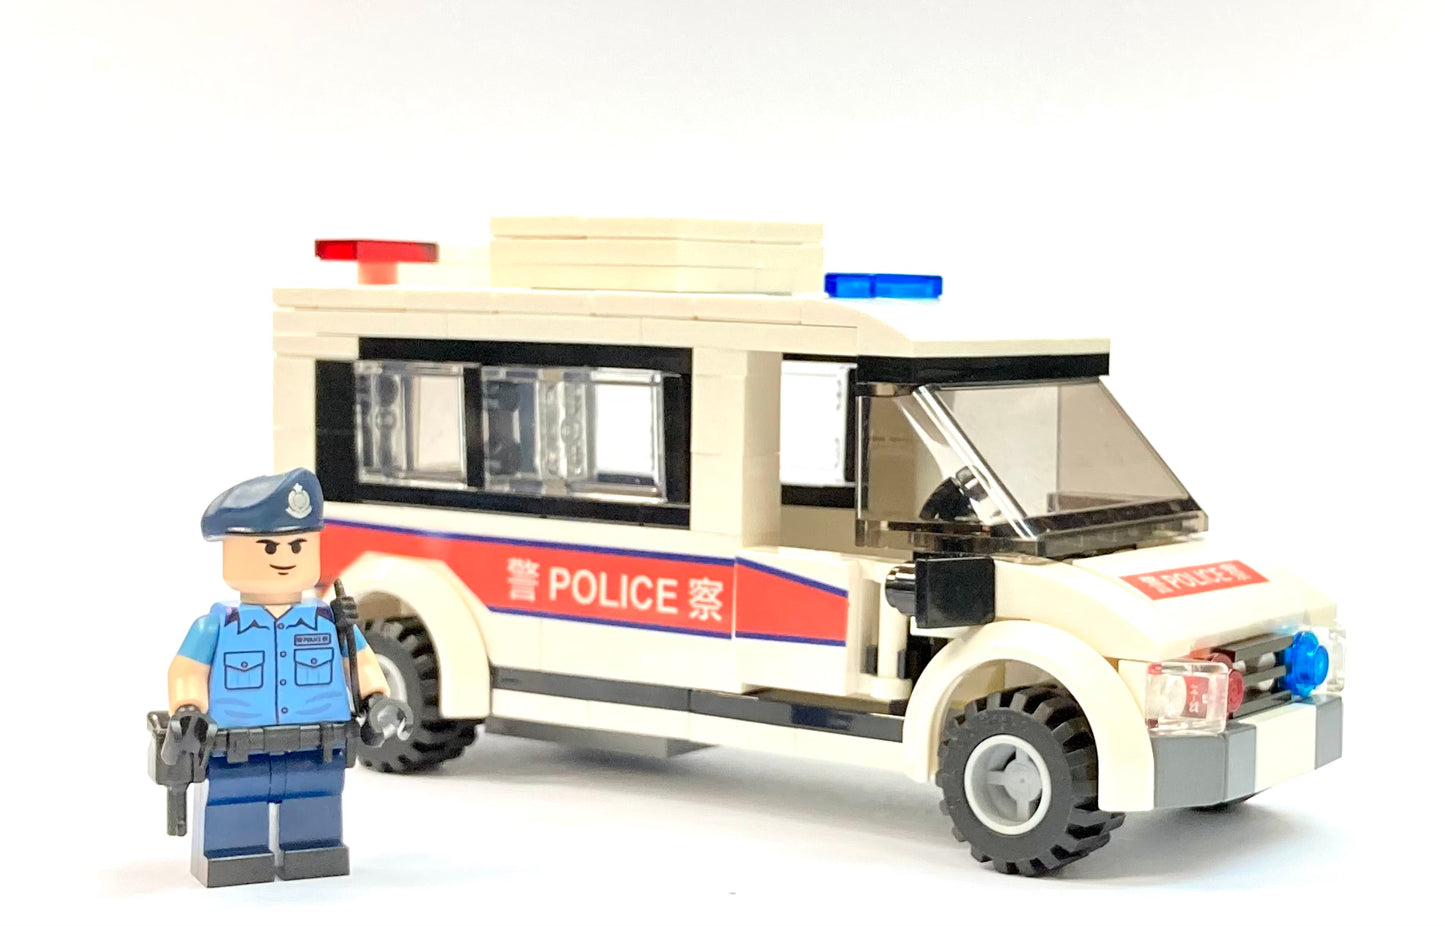 Police MP car